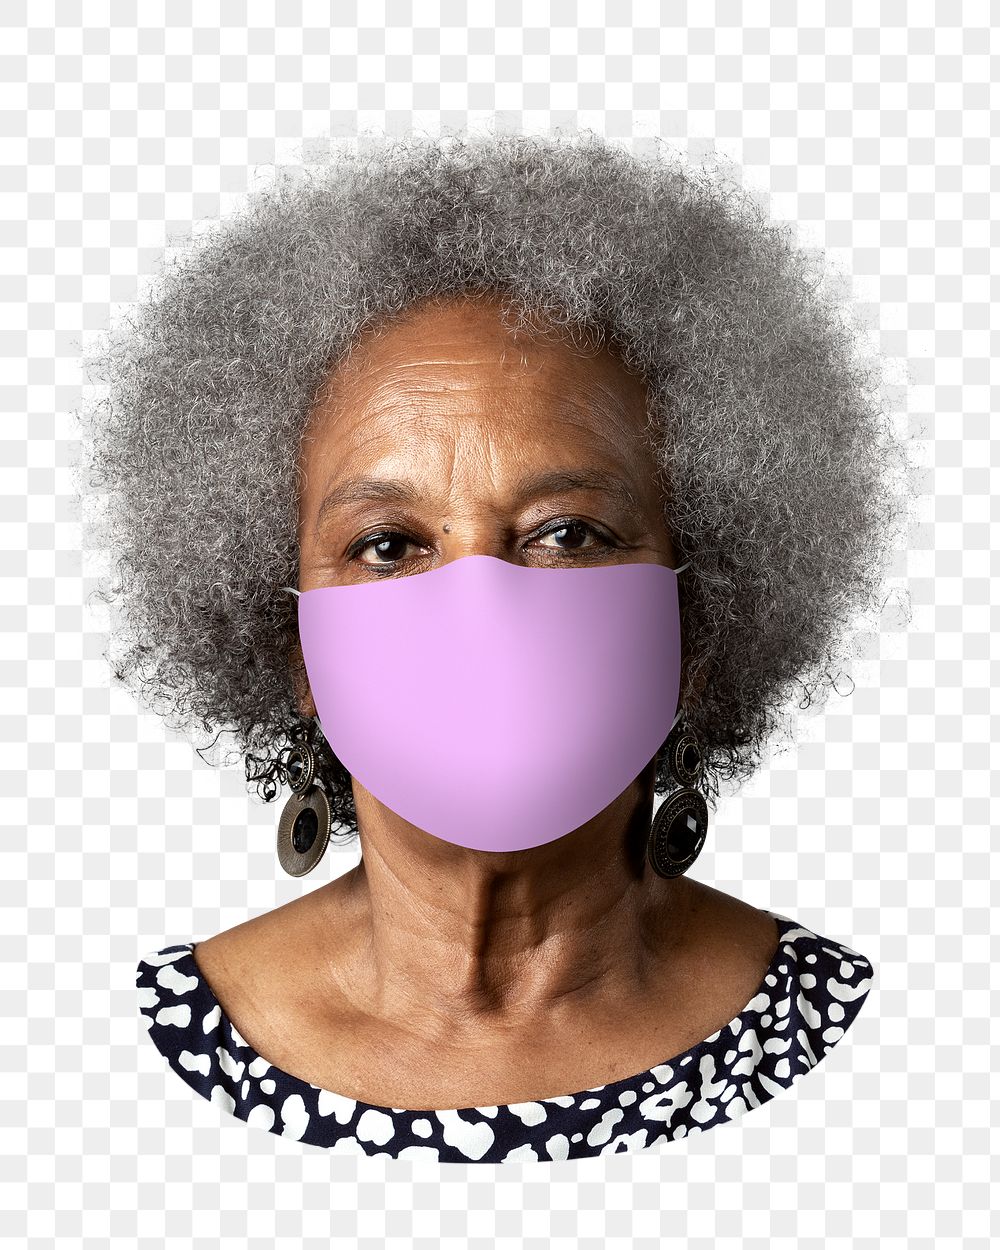 Mature woman png purple mask, transparent background